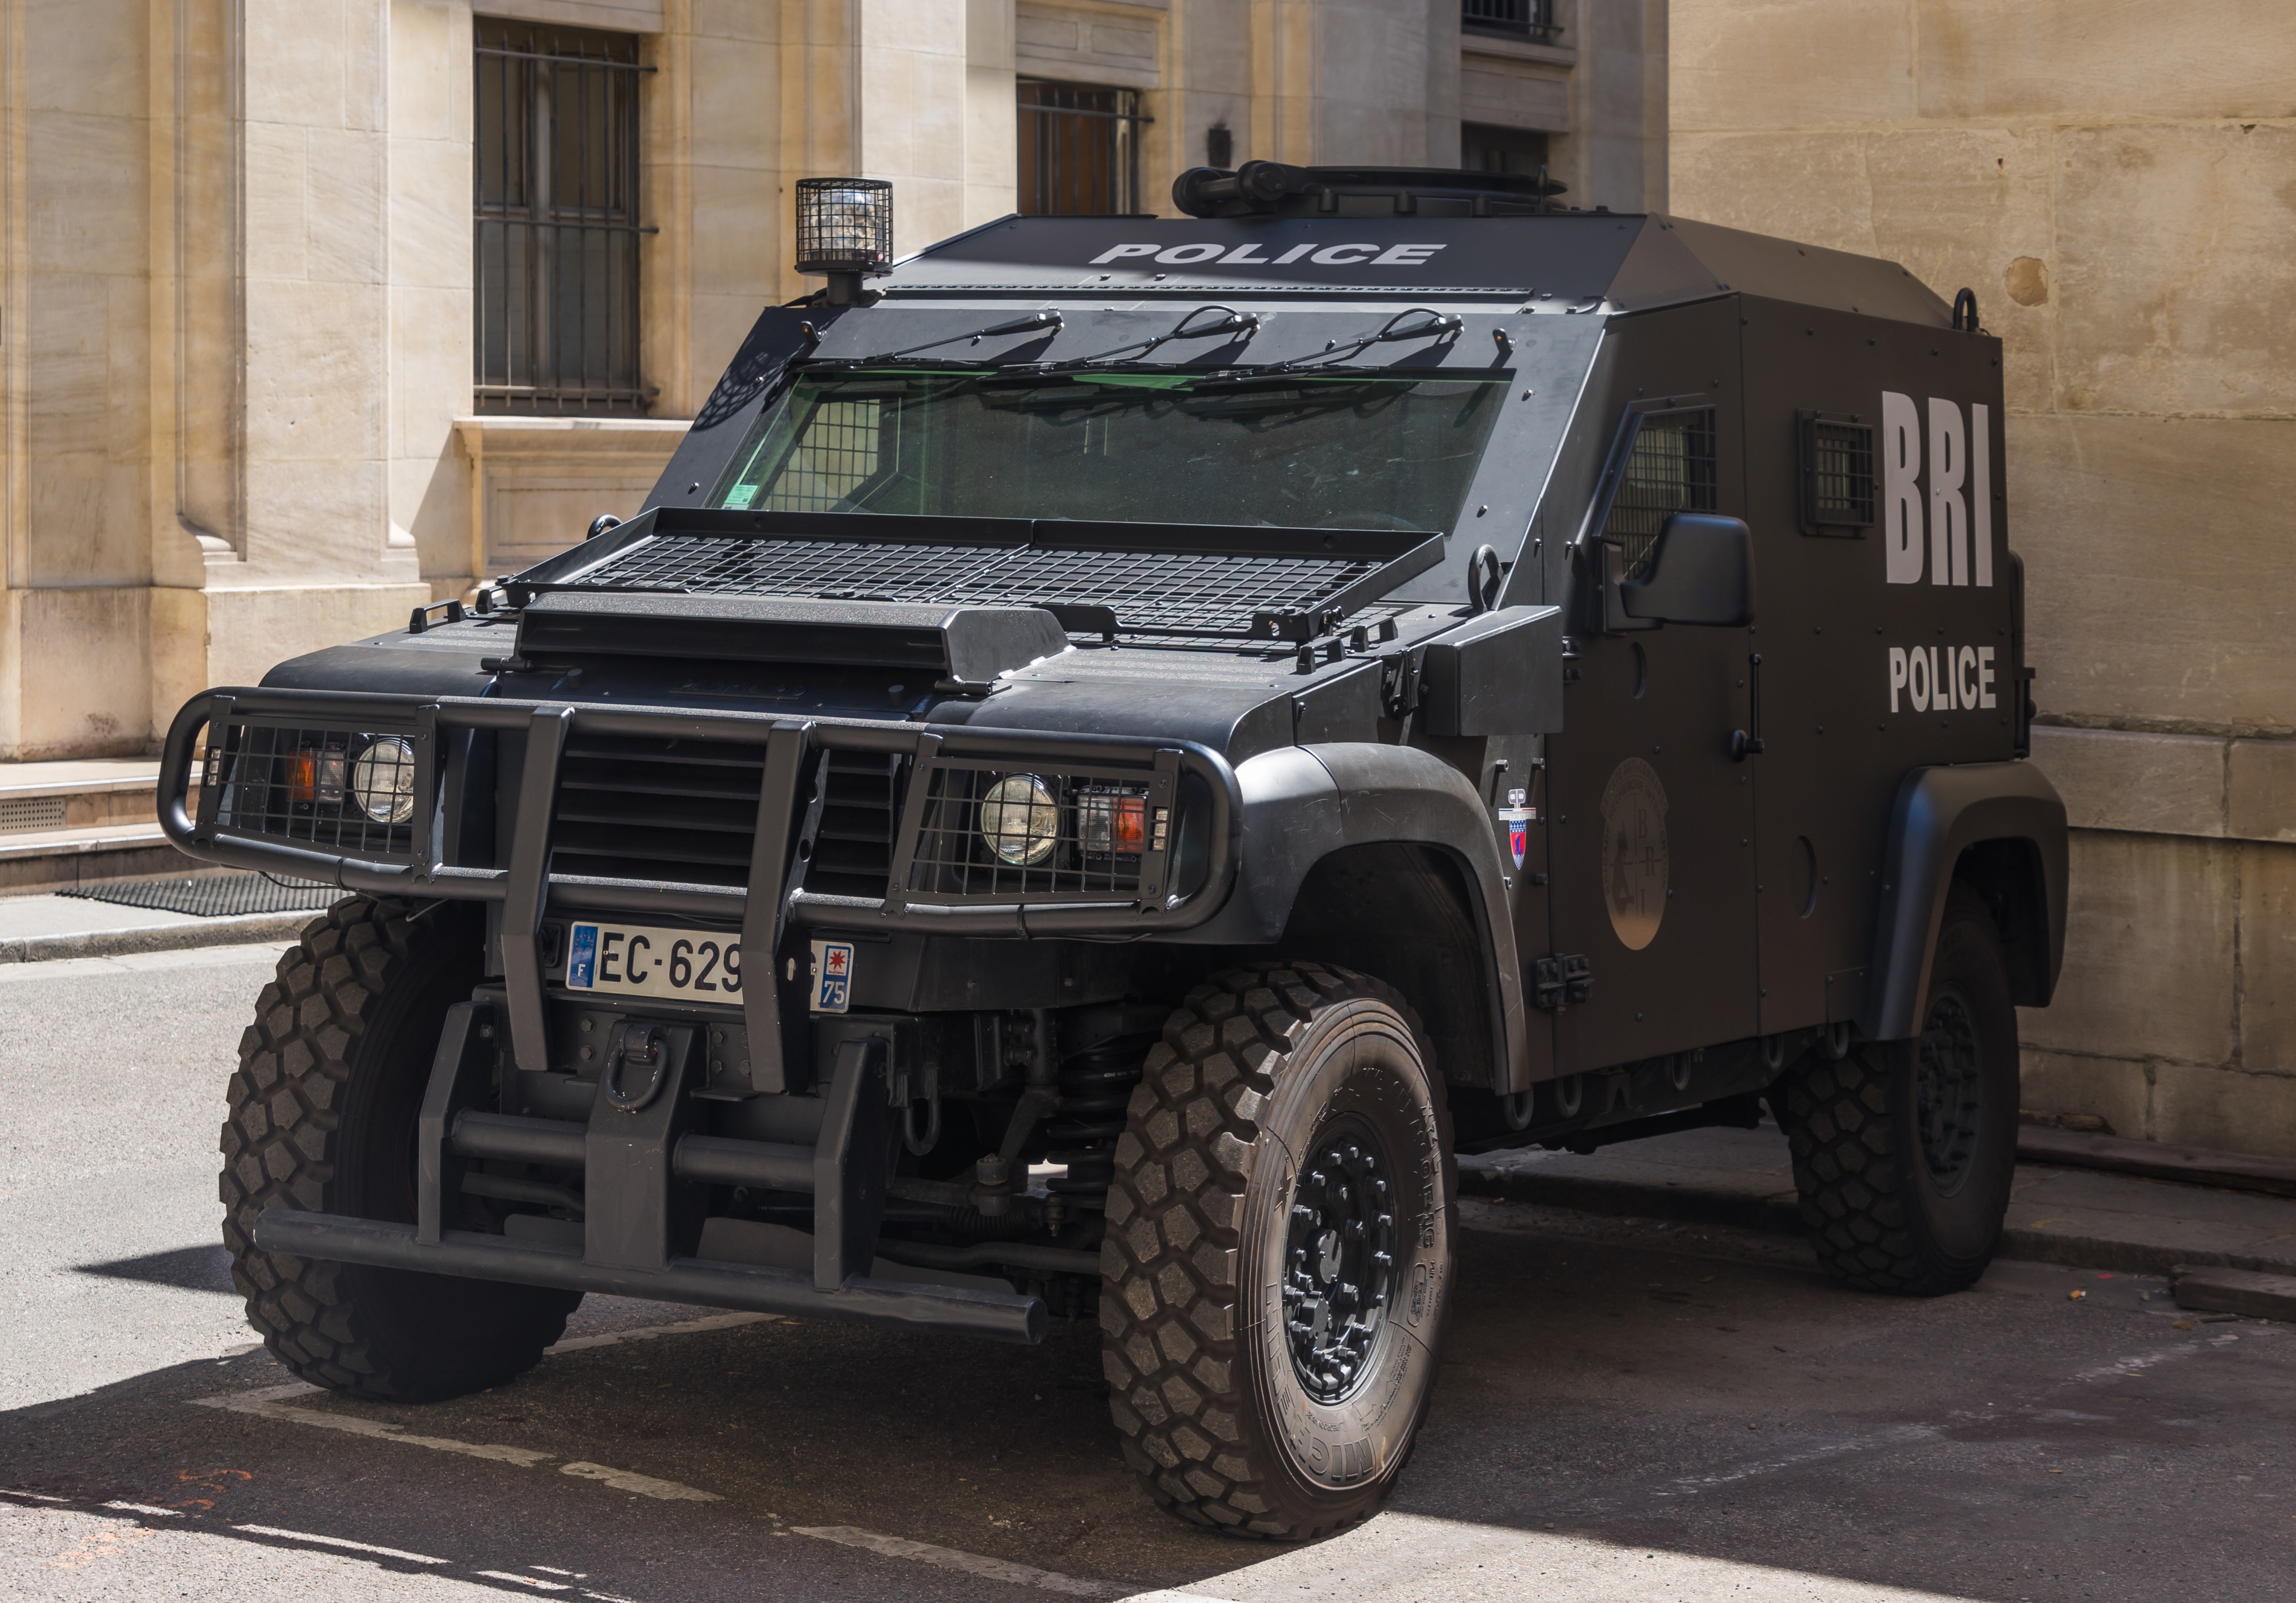 Police BRI armoured Panhard car Paris France